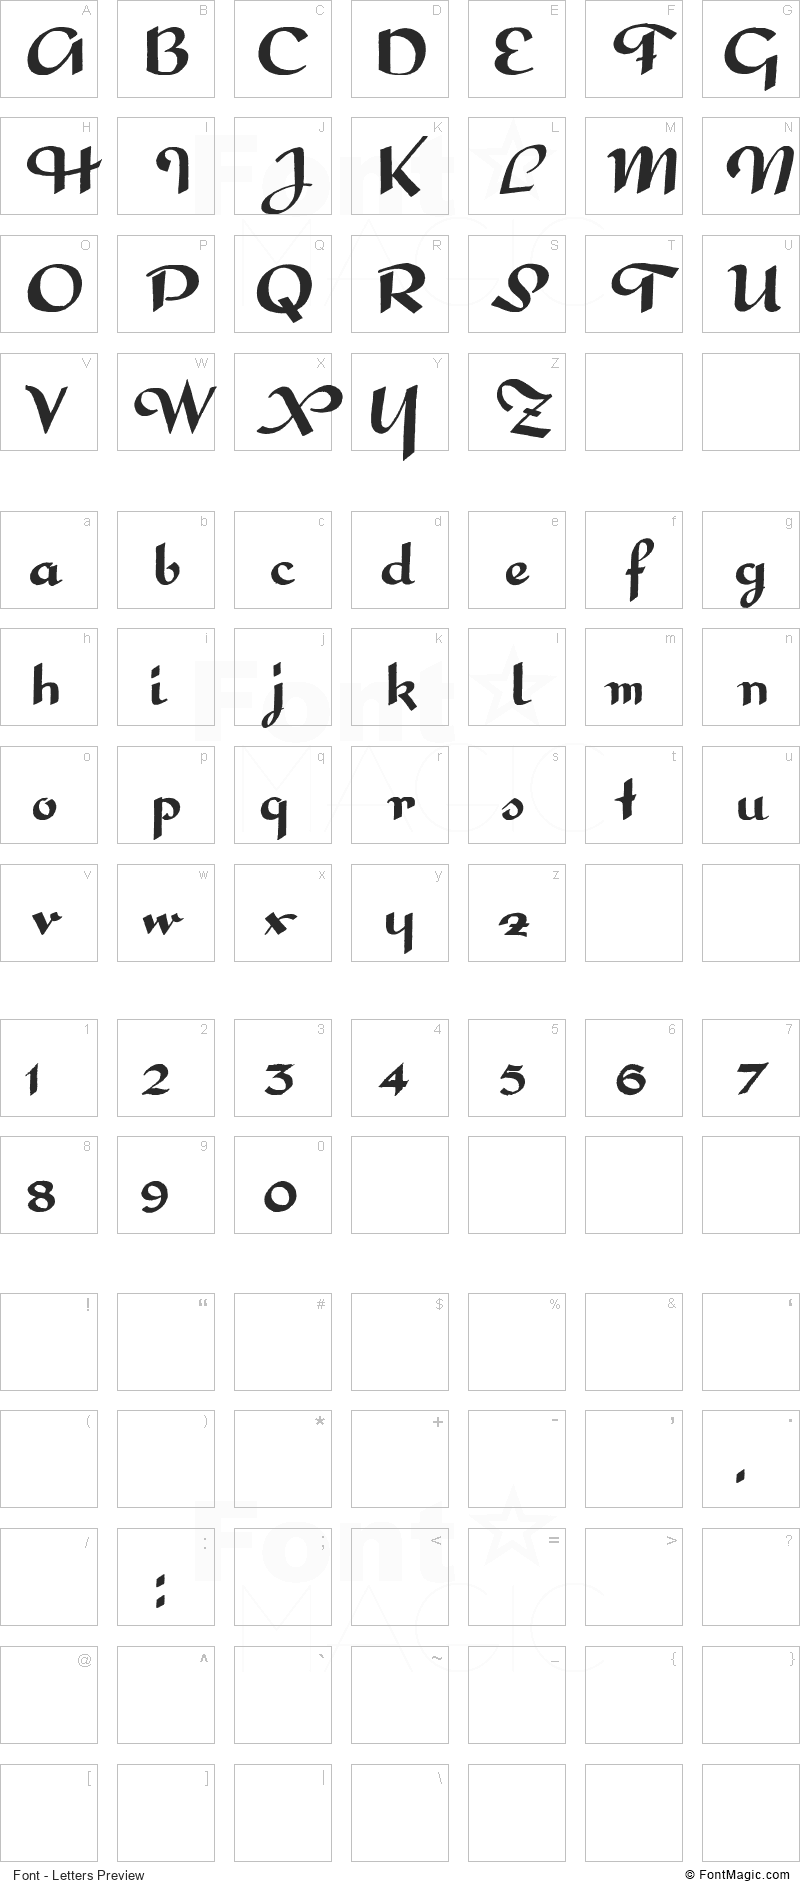 Interdite Script Font - All Latters Preview Chart